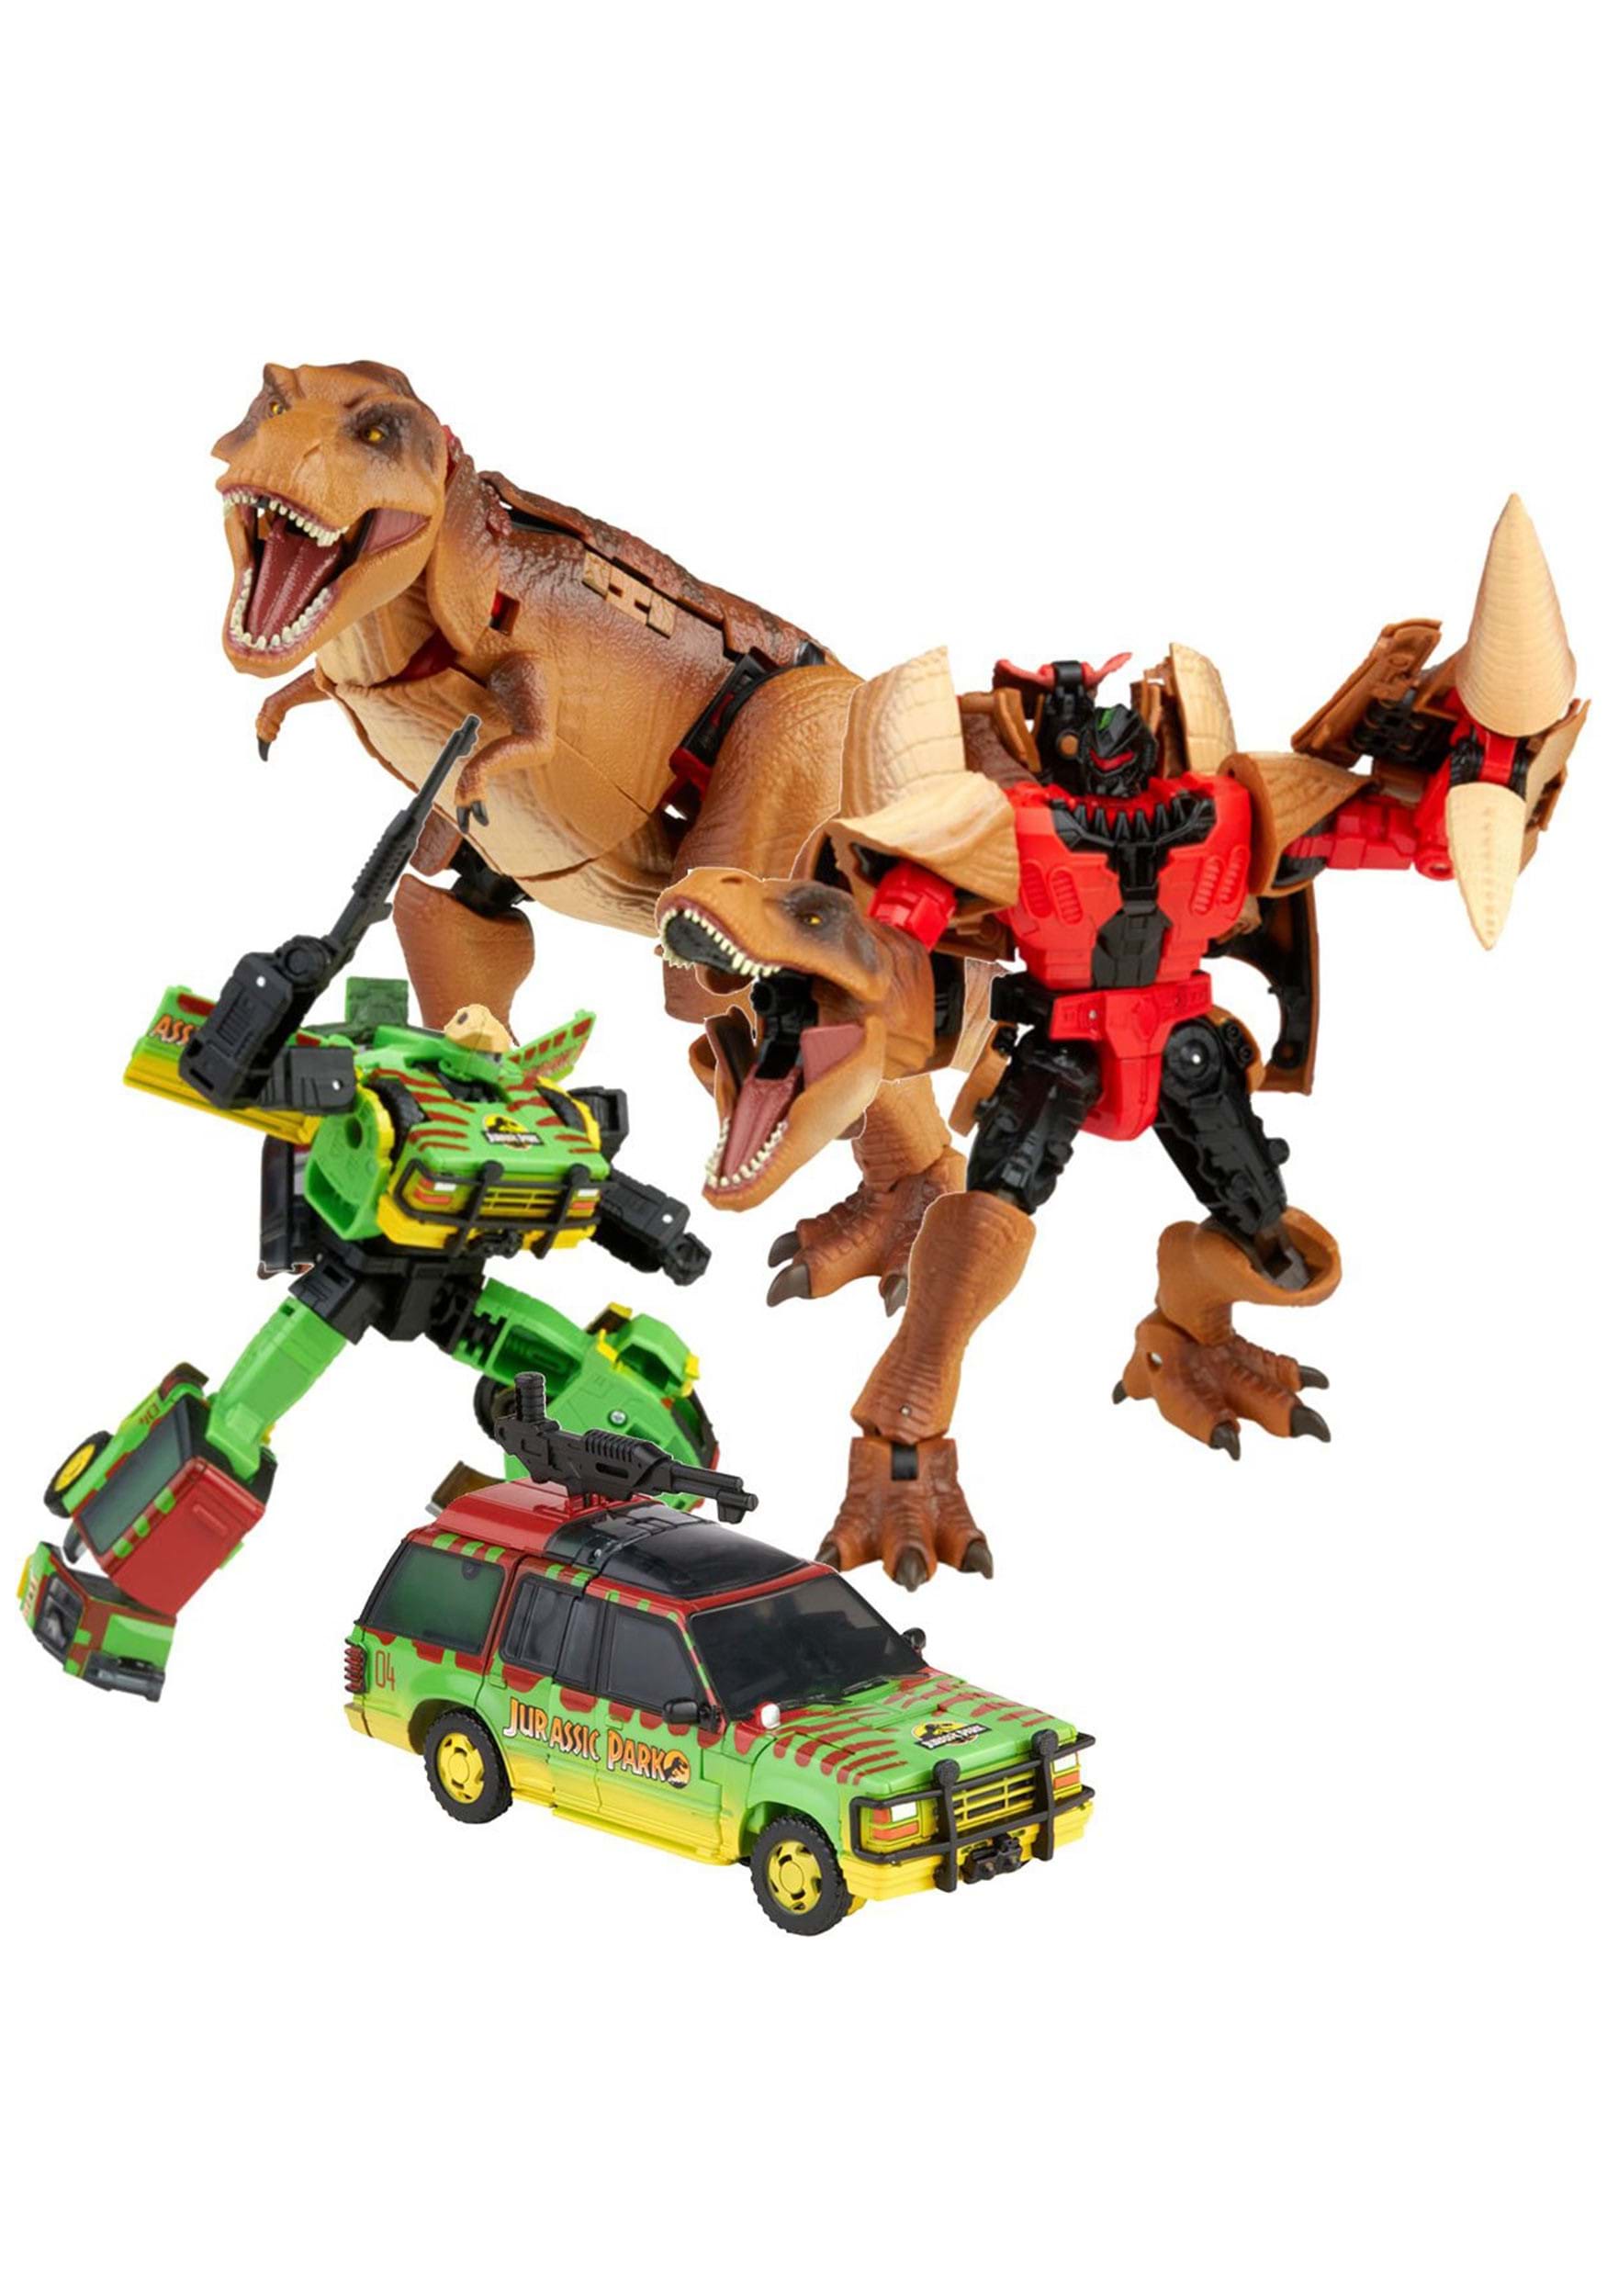 Image of Hasbro Jurassic Park Transformers Tyrannocon Rex Mash-Up